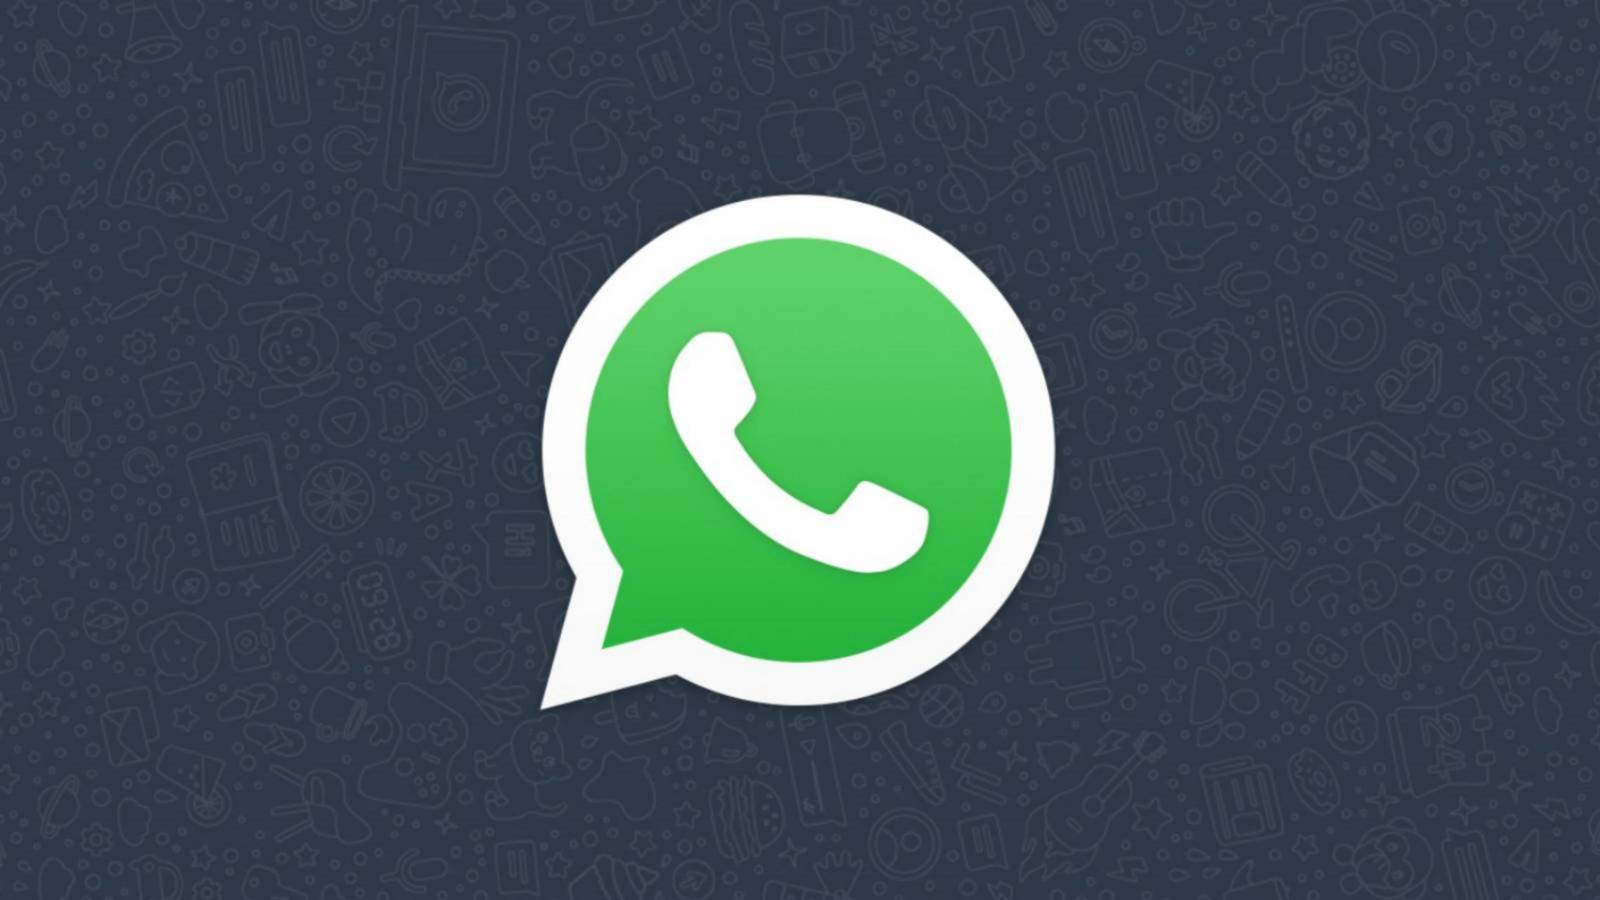 WhatsApp taxare